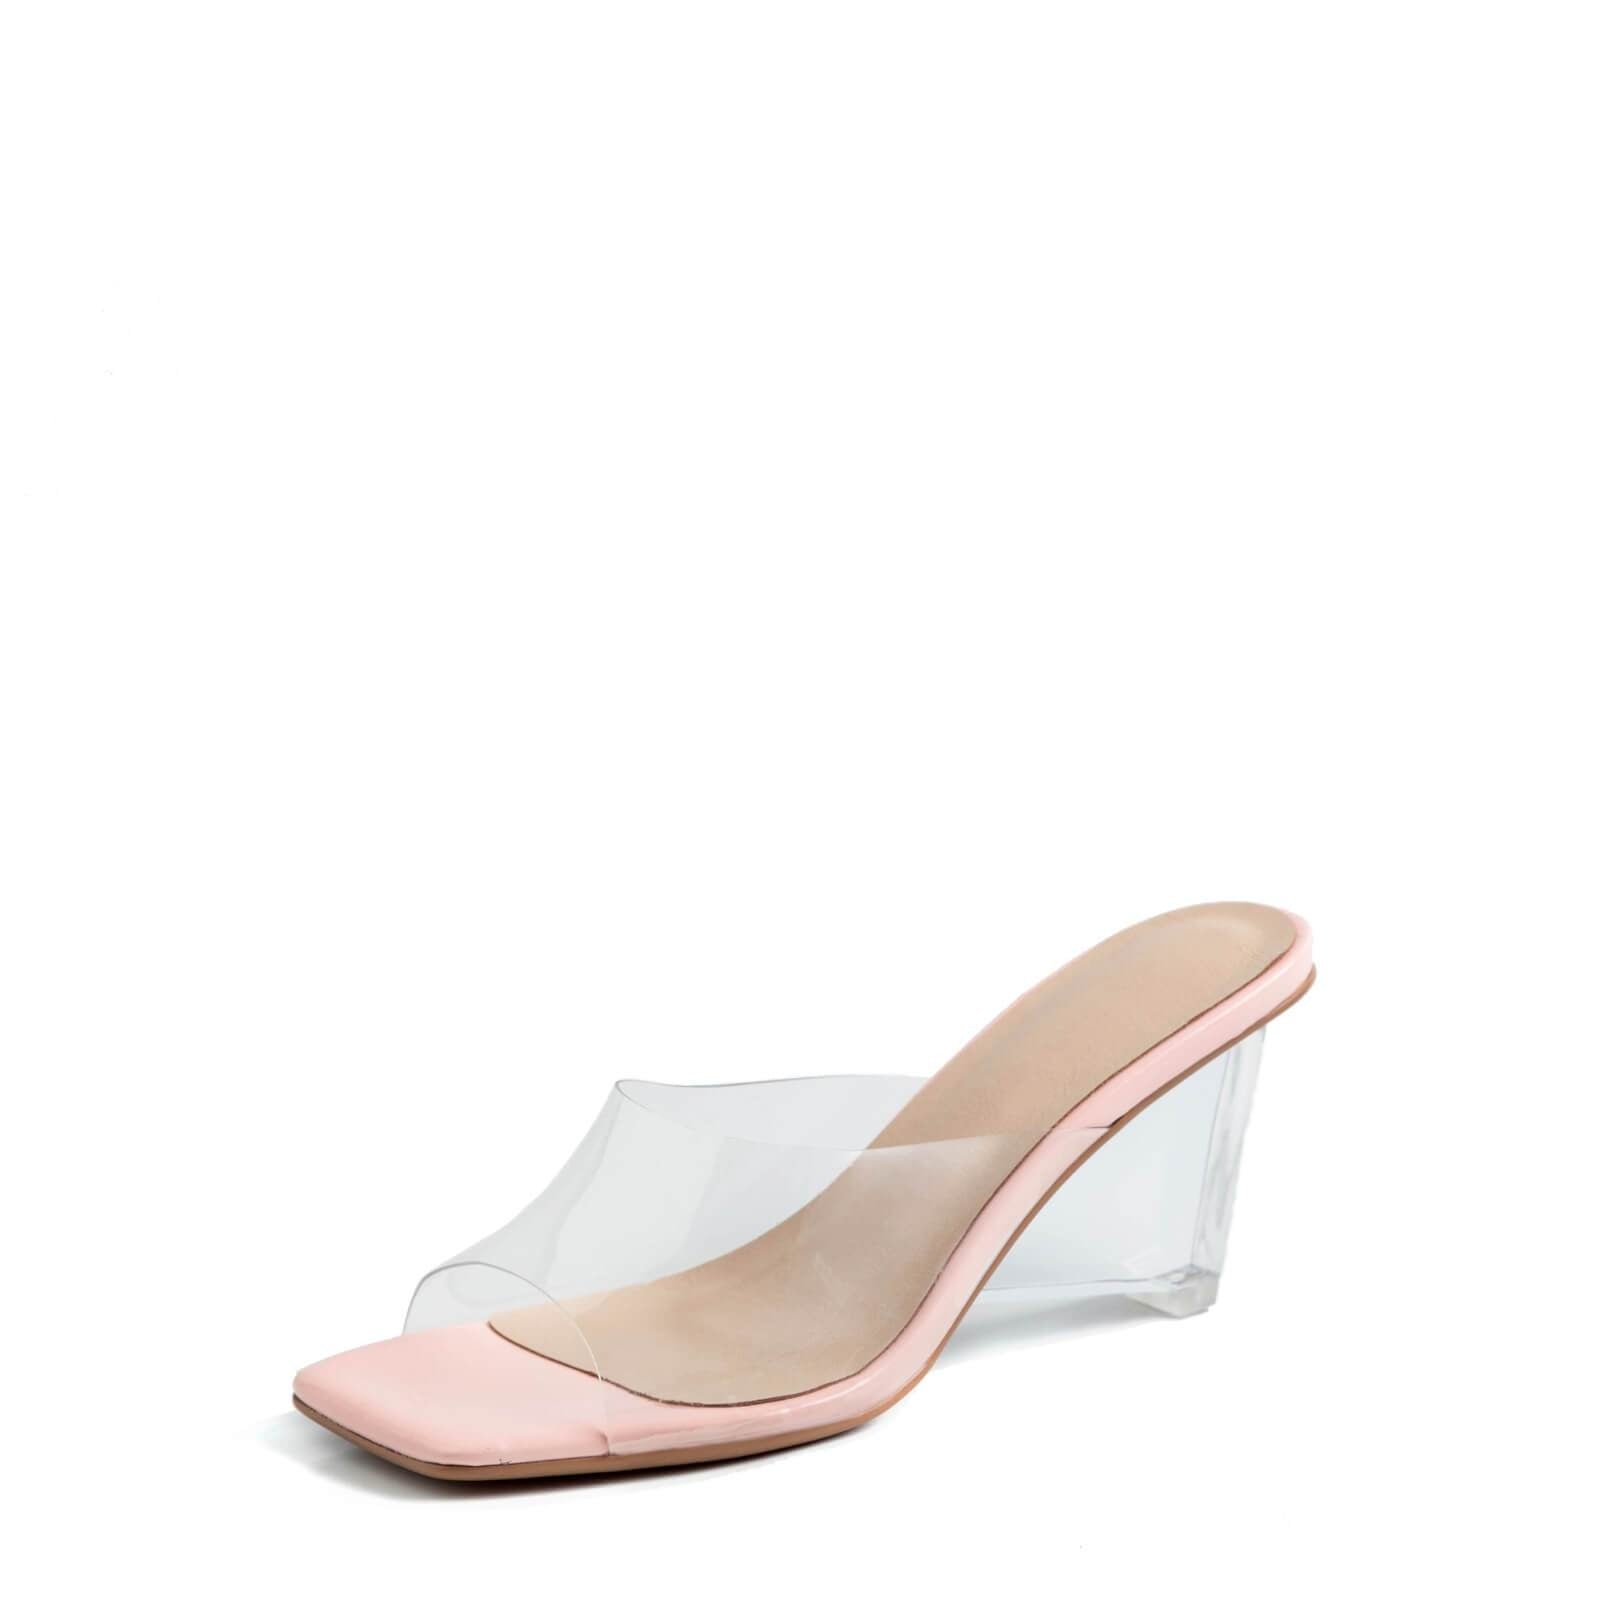 ROLISA-Falo-Square-Toe-Clear-Strap-Transparent-Wedge-Heels-Sandals-Pink